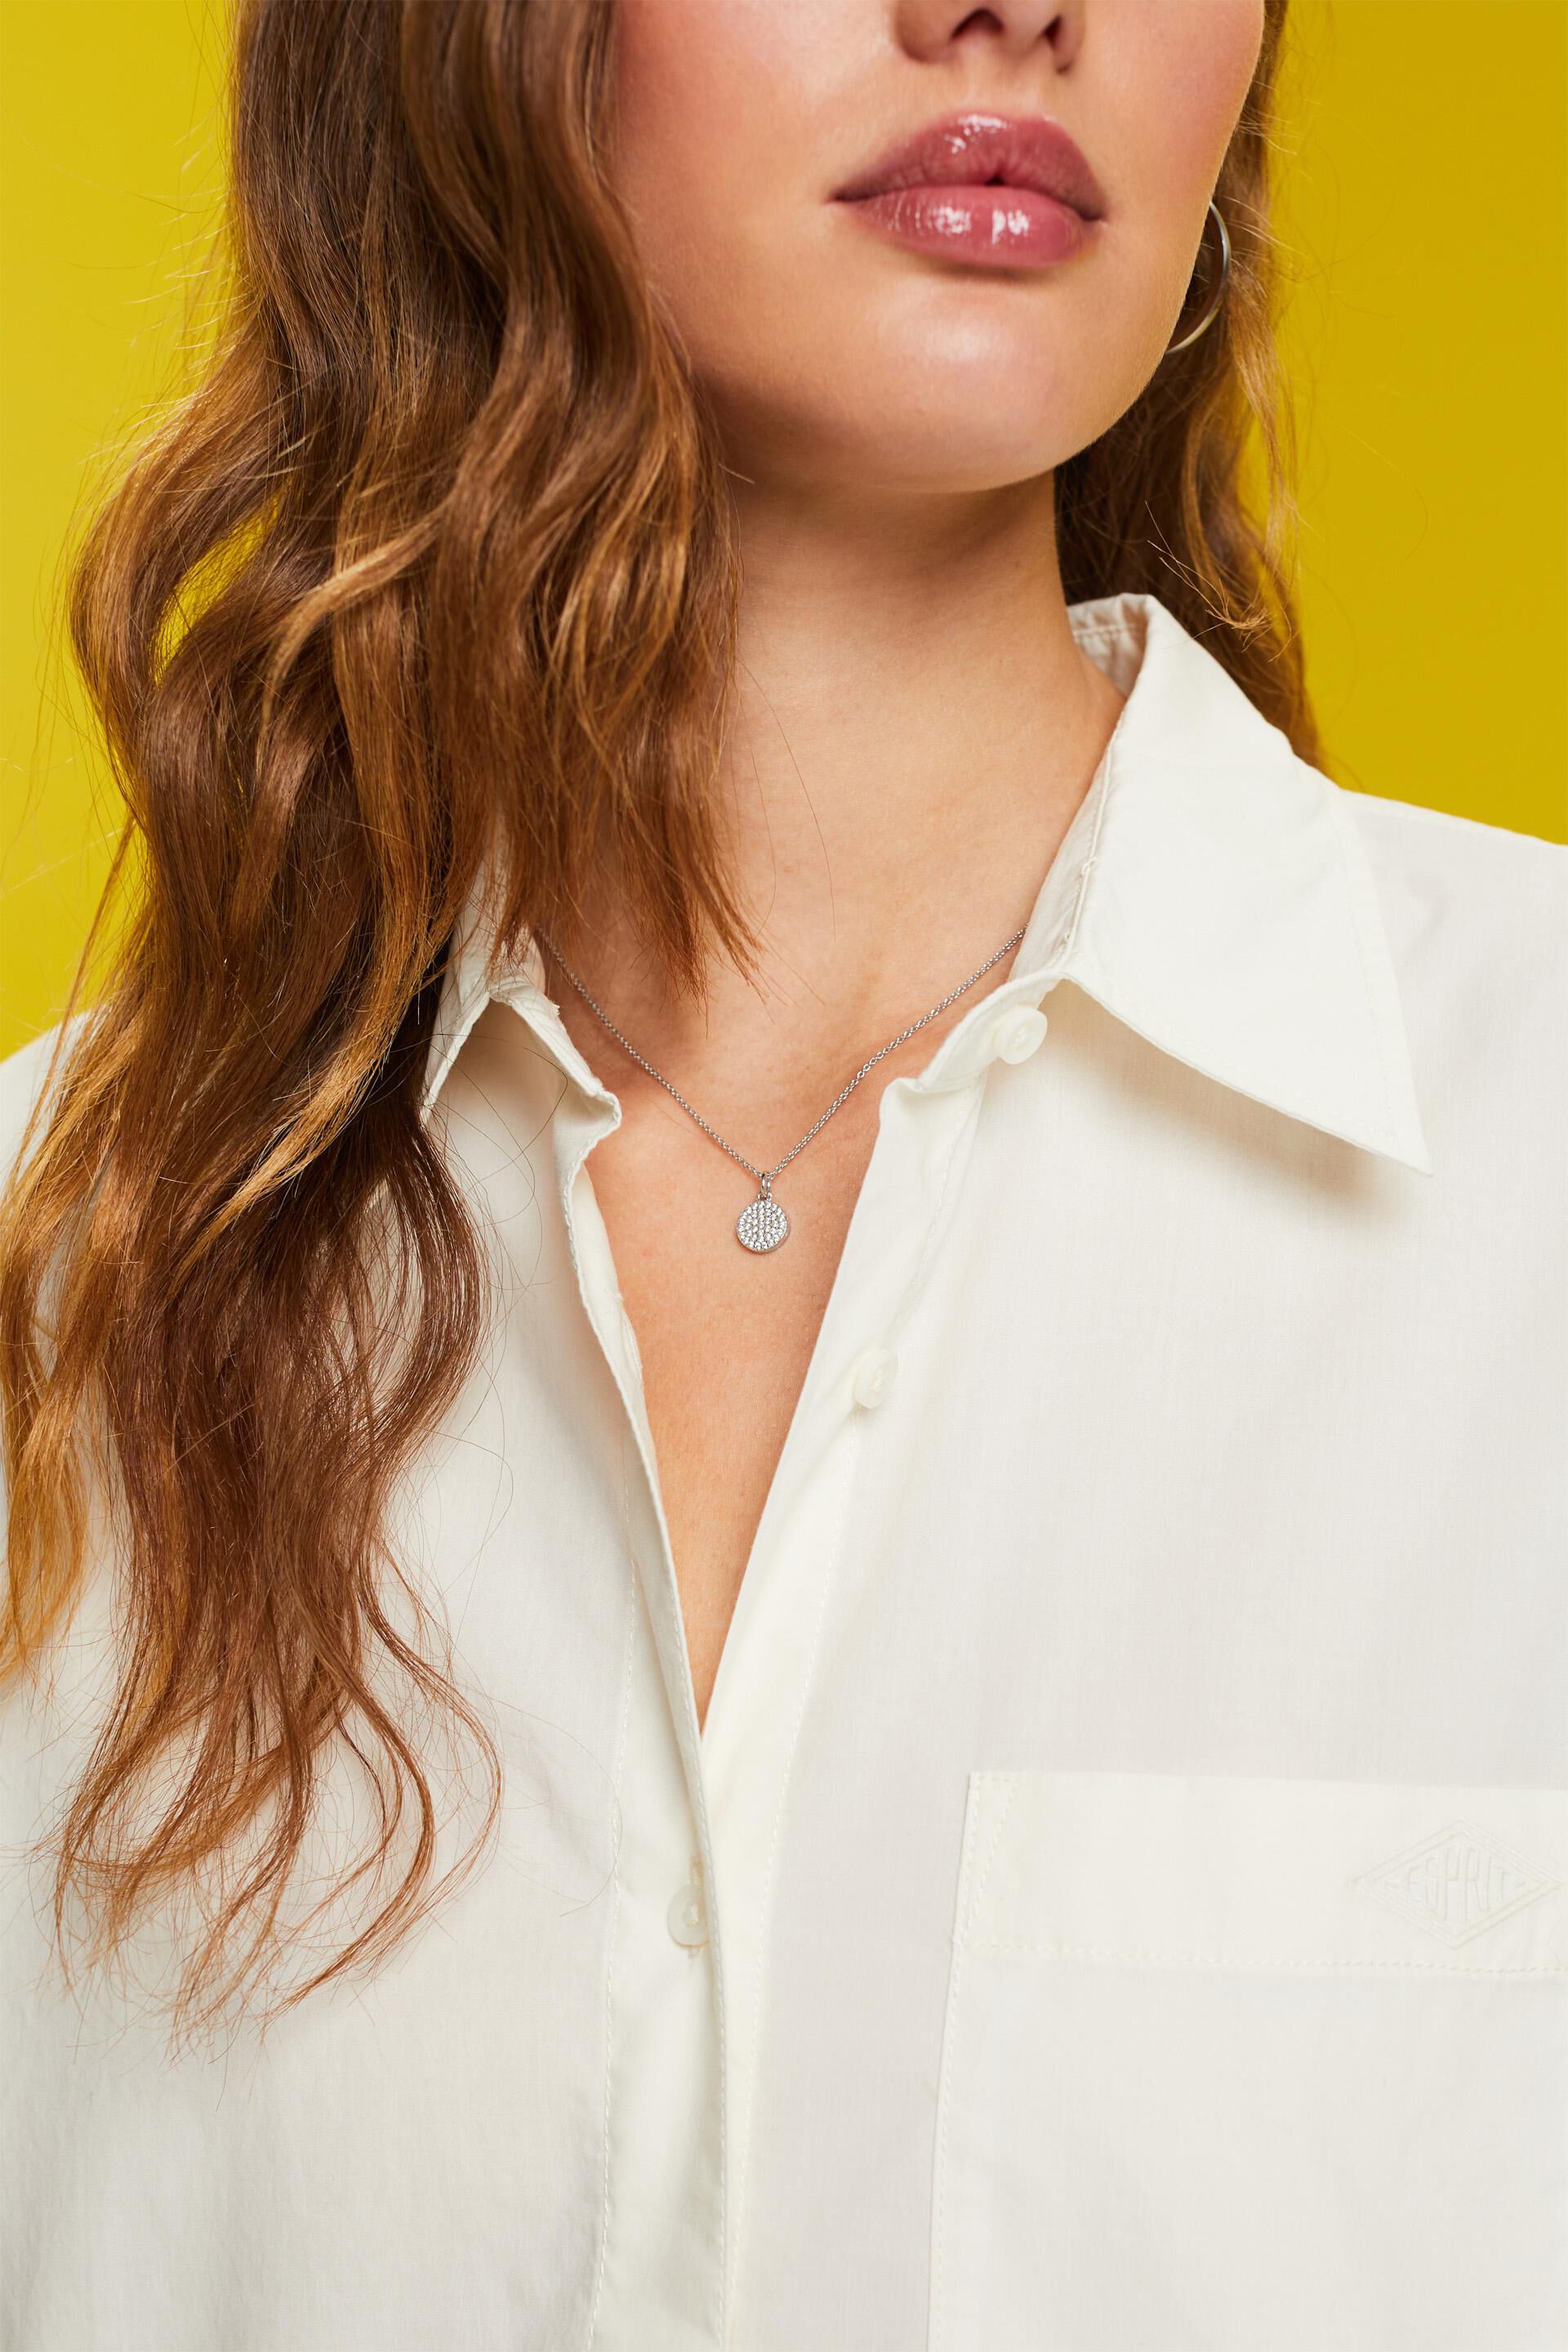 Esprit Online Store Halskette mit Zirkonia-Anhänger, Sterlingsilber